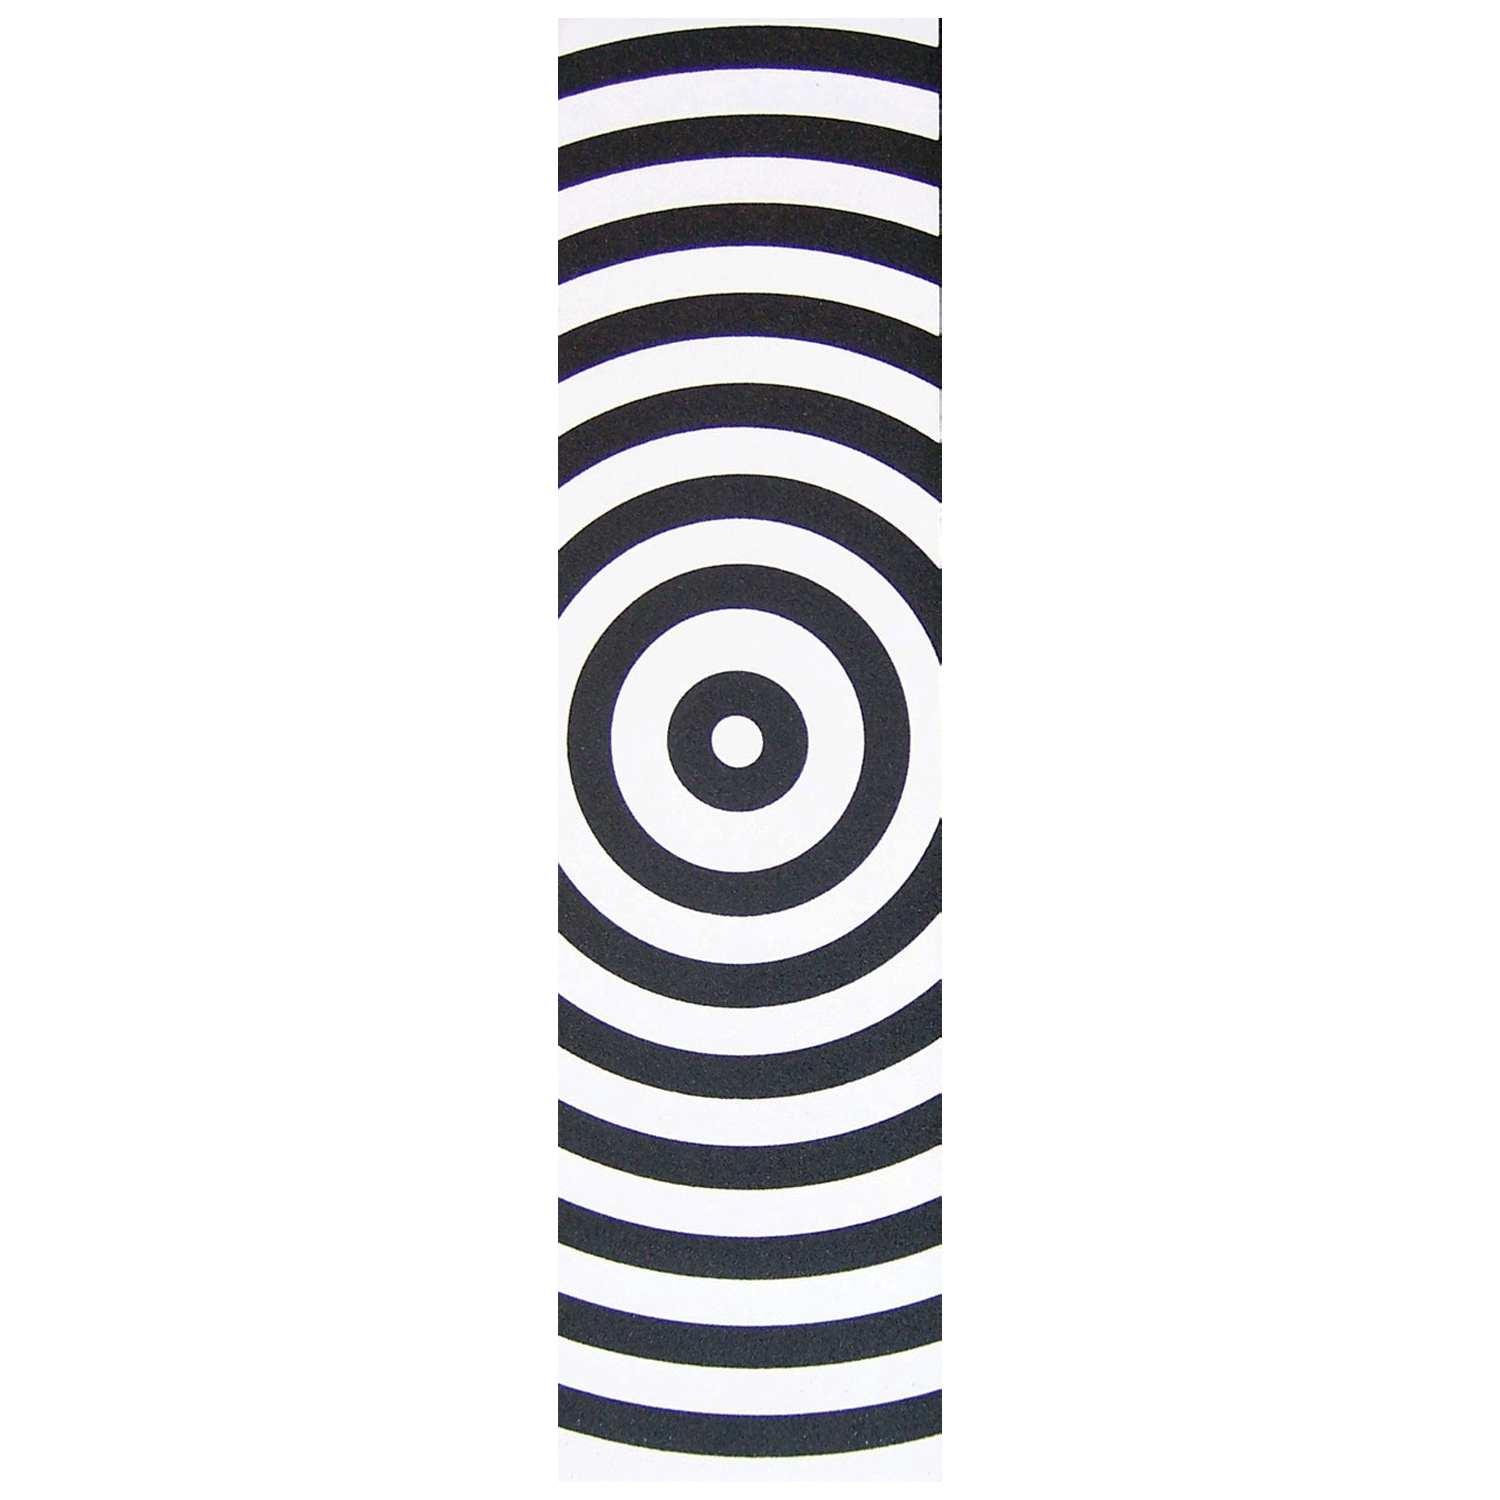 Black Diamond Grip Skateboard Griptape Sheet Tag Logo 9 x 33